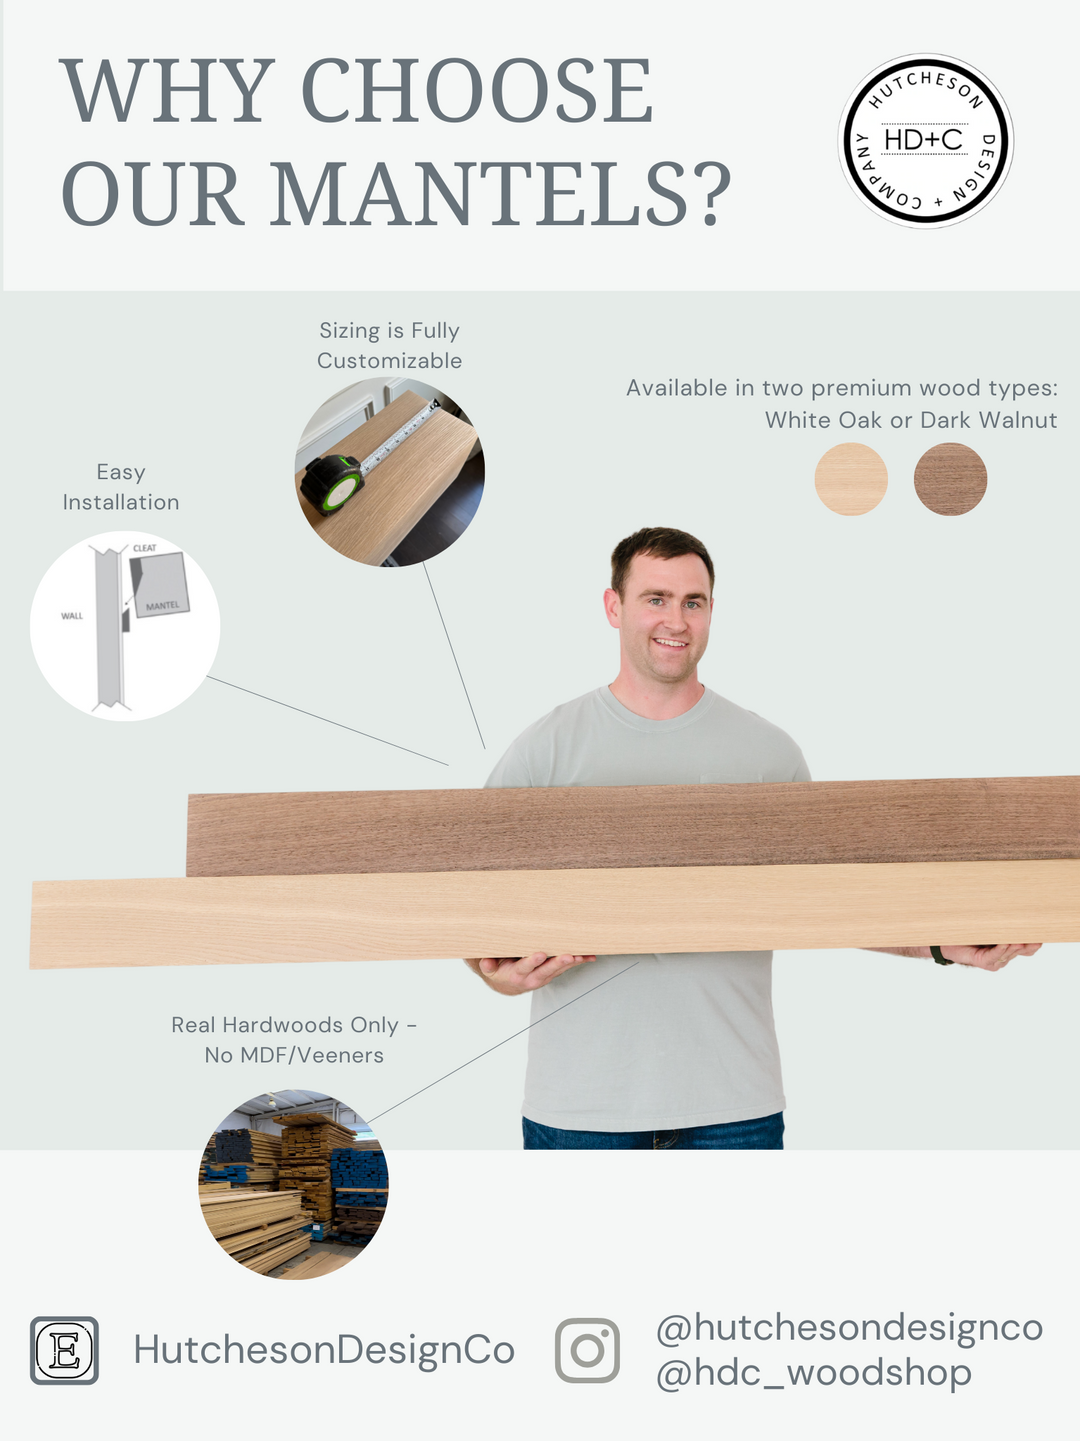 Dark Walnut Fireplace Mantel - Custom Built - Real Wood Mantel